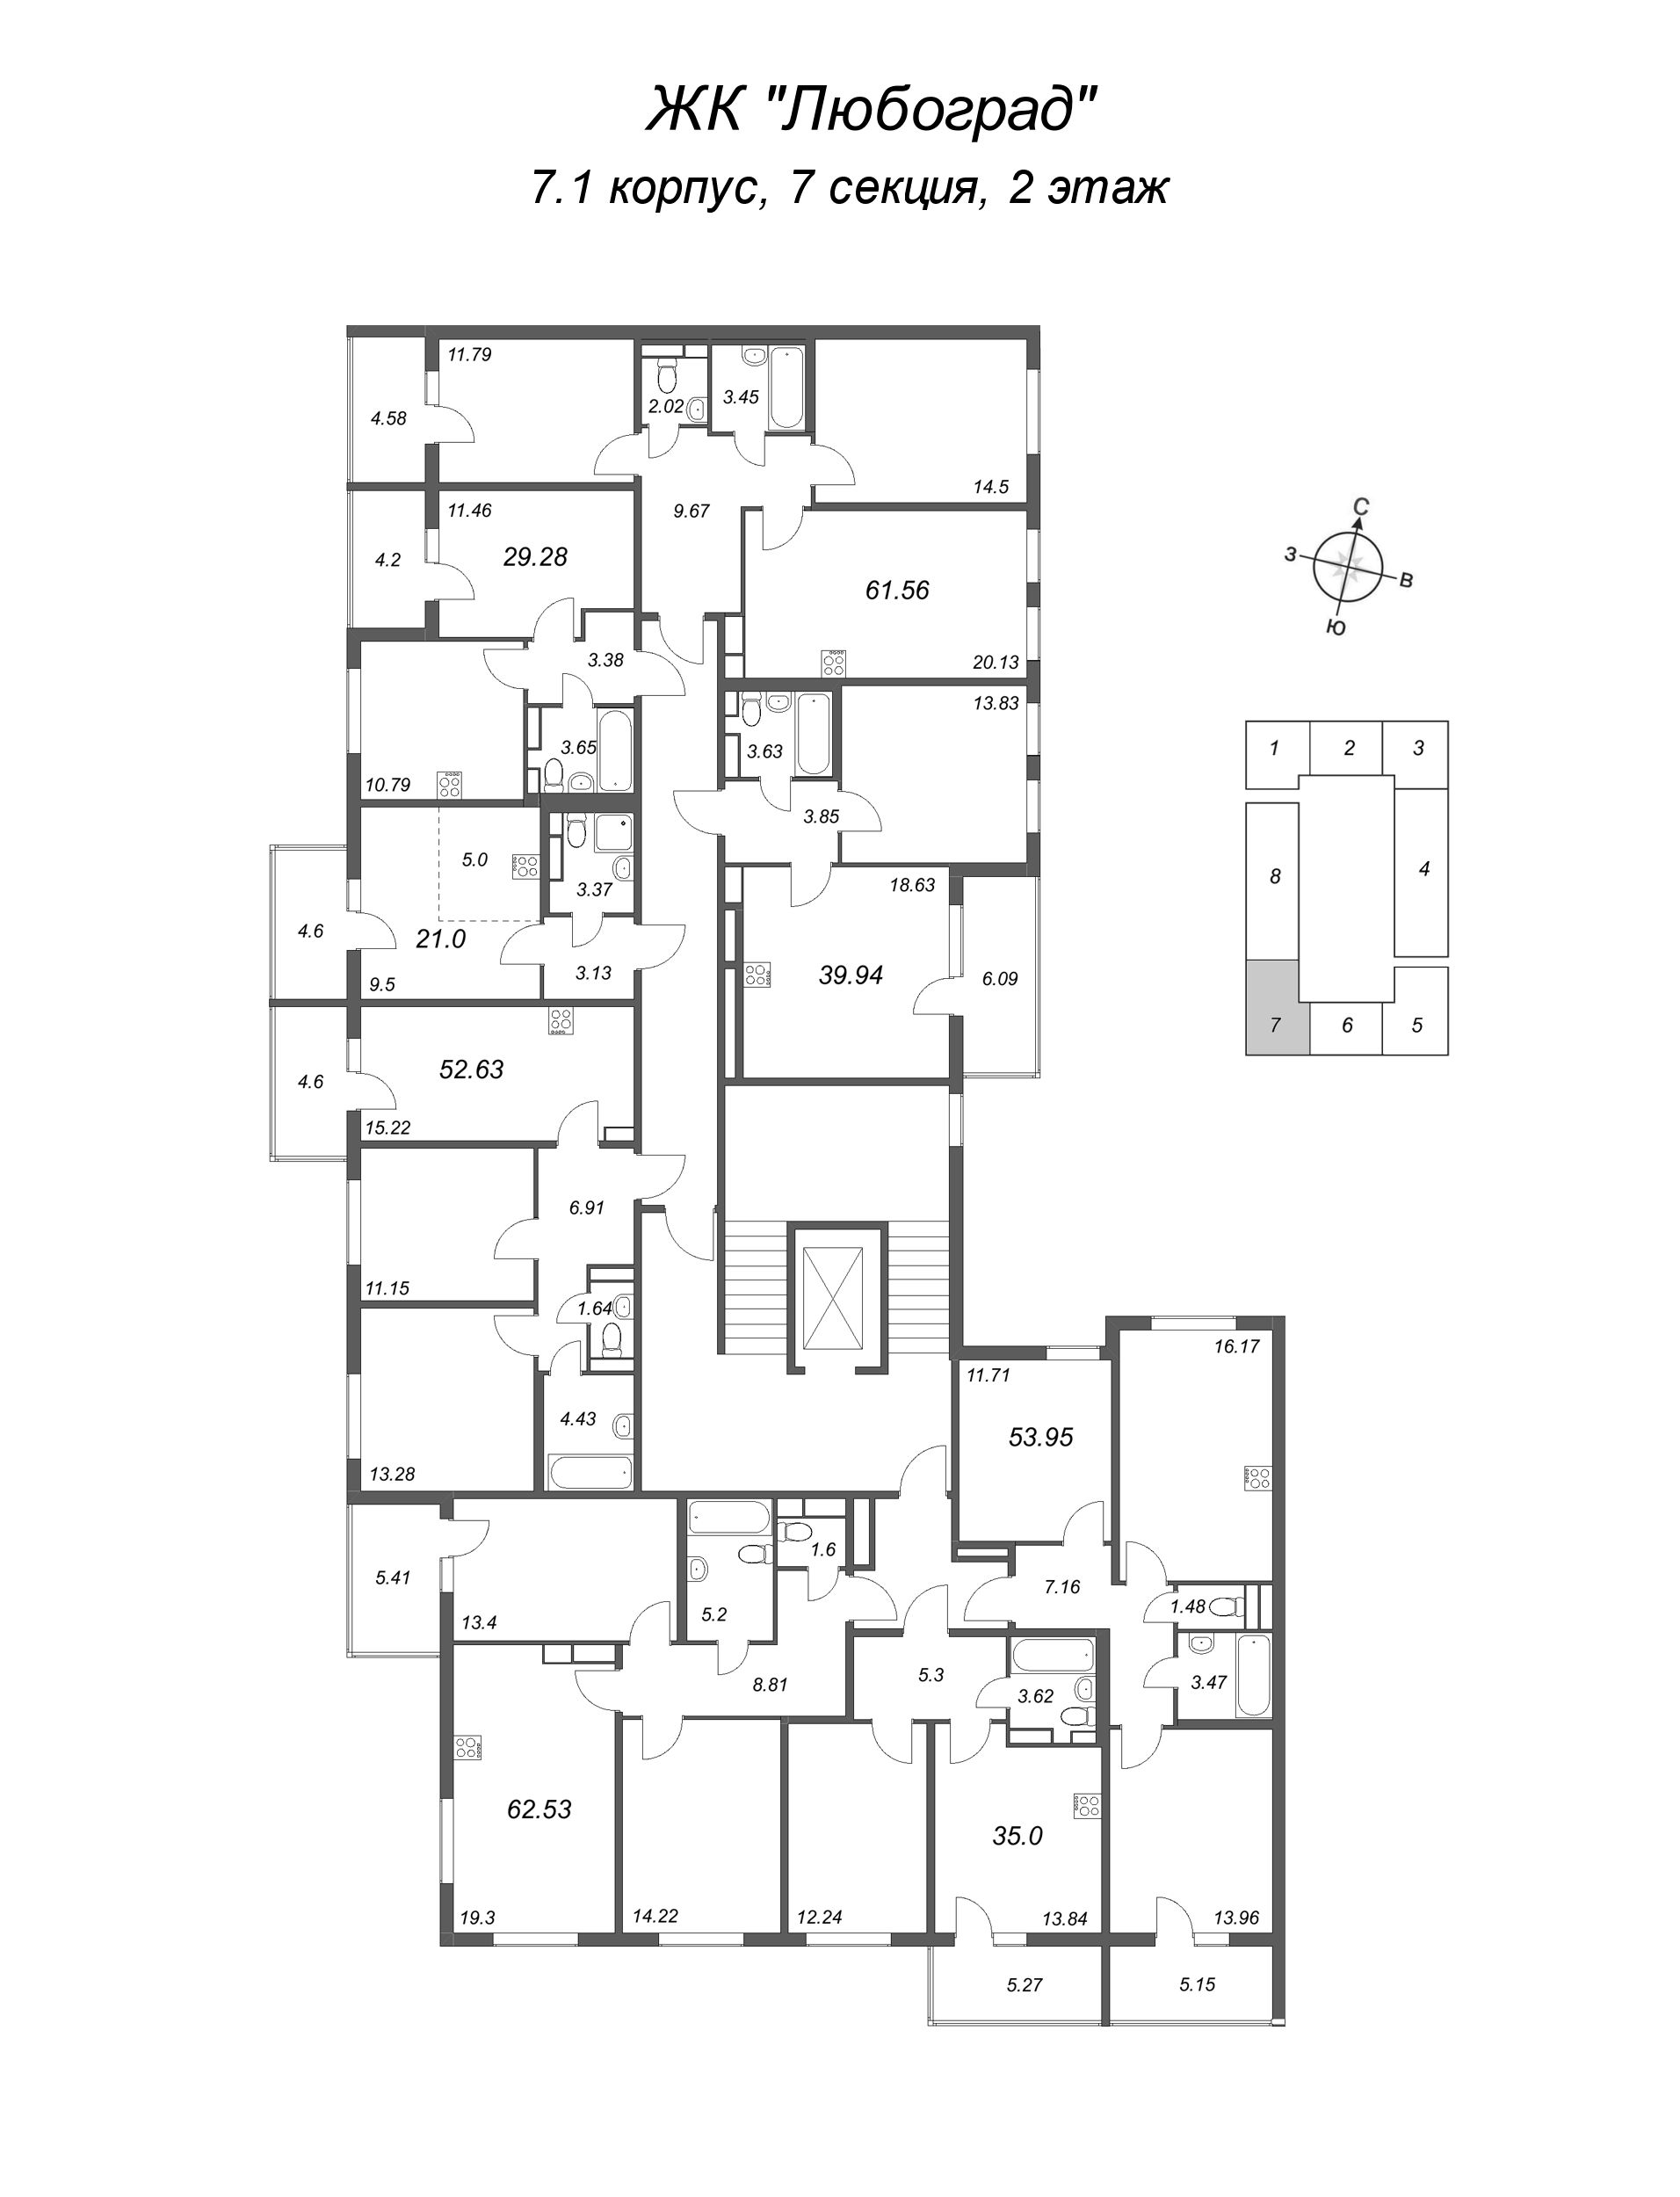 3-комнатная (Евро) квартира, 52.63 м² - планировка этажа